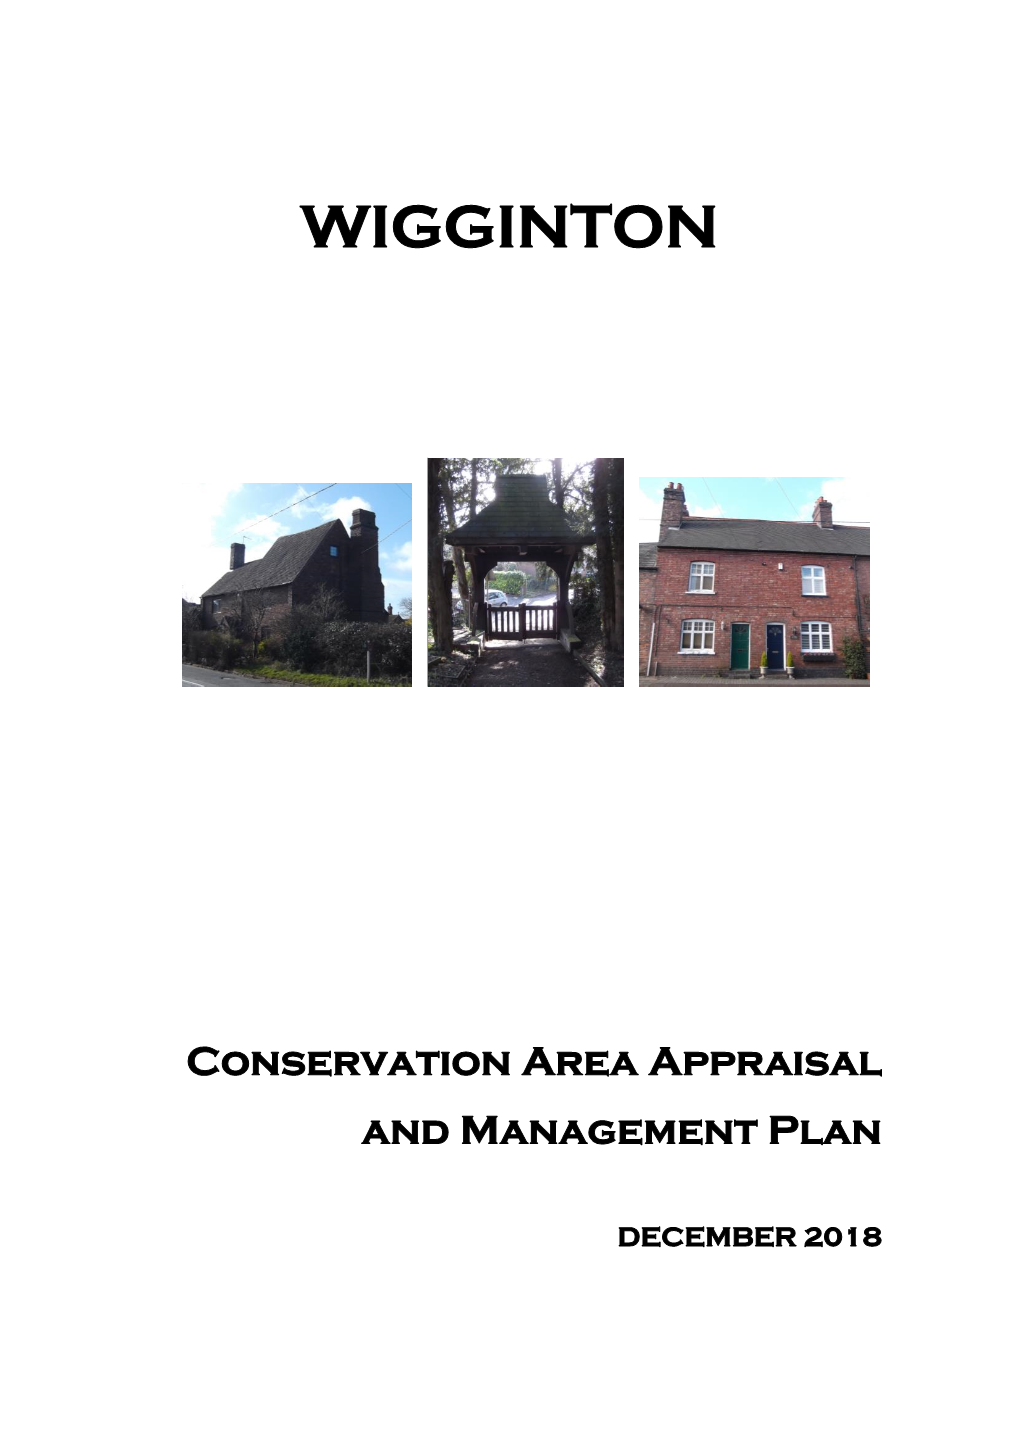 Wigginton Conservation Area Appraisal and Management Plan